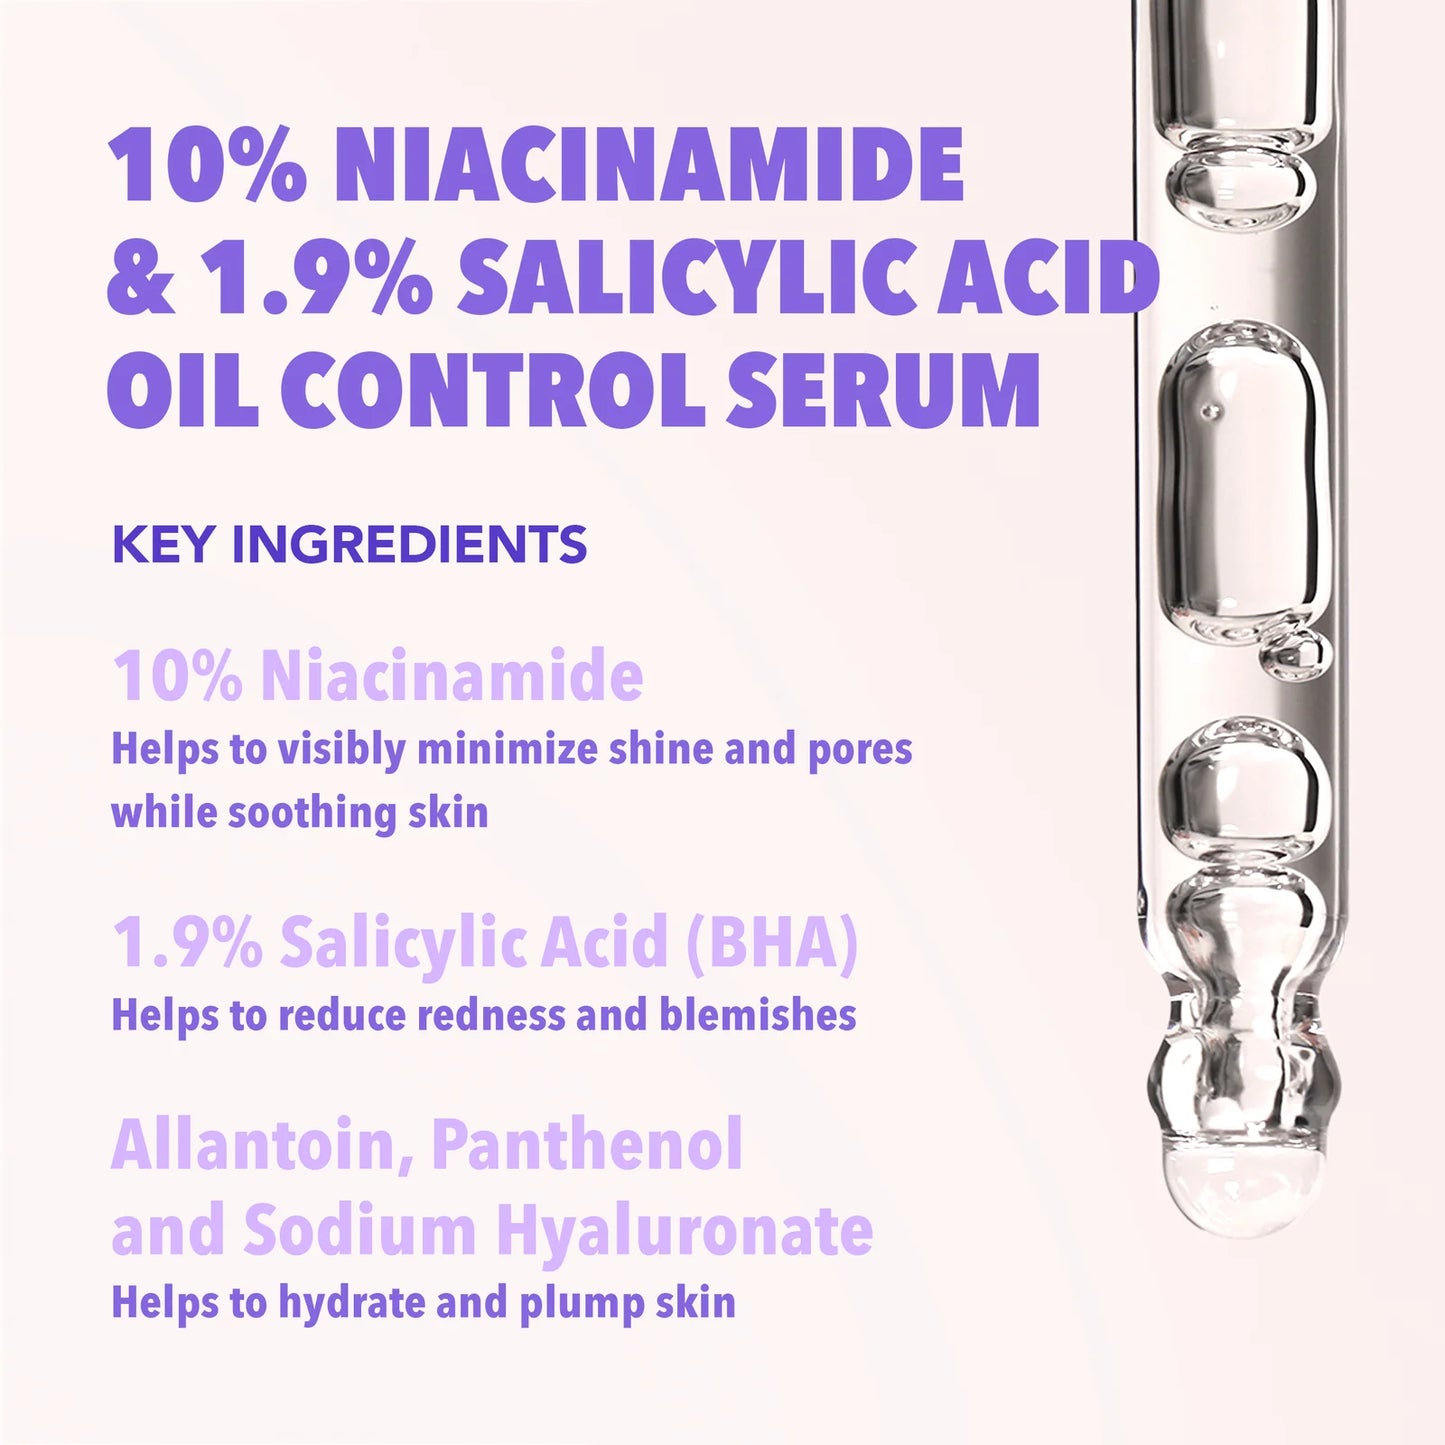 10% Niacinamide & 1.9% Salicylic Acid Oil Control Serum